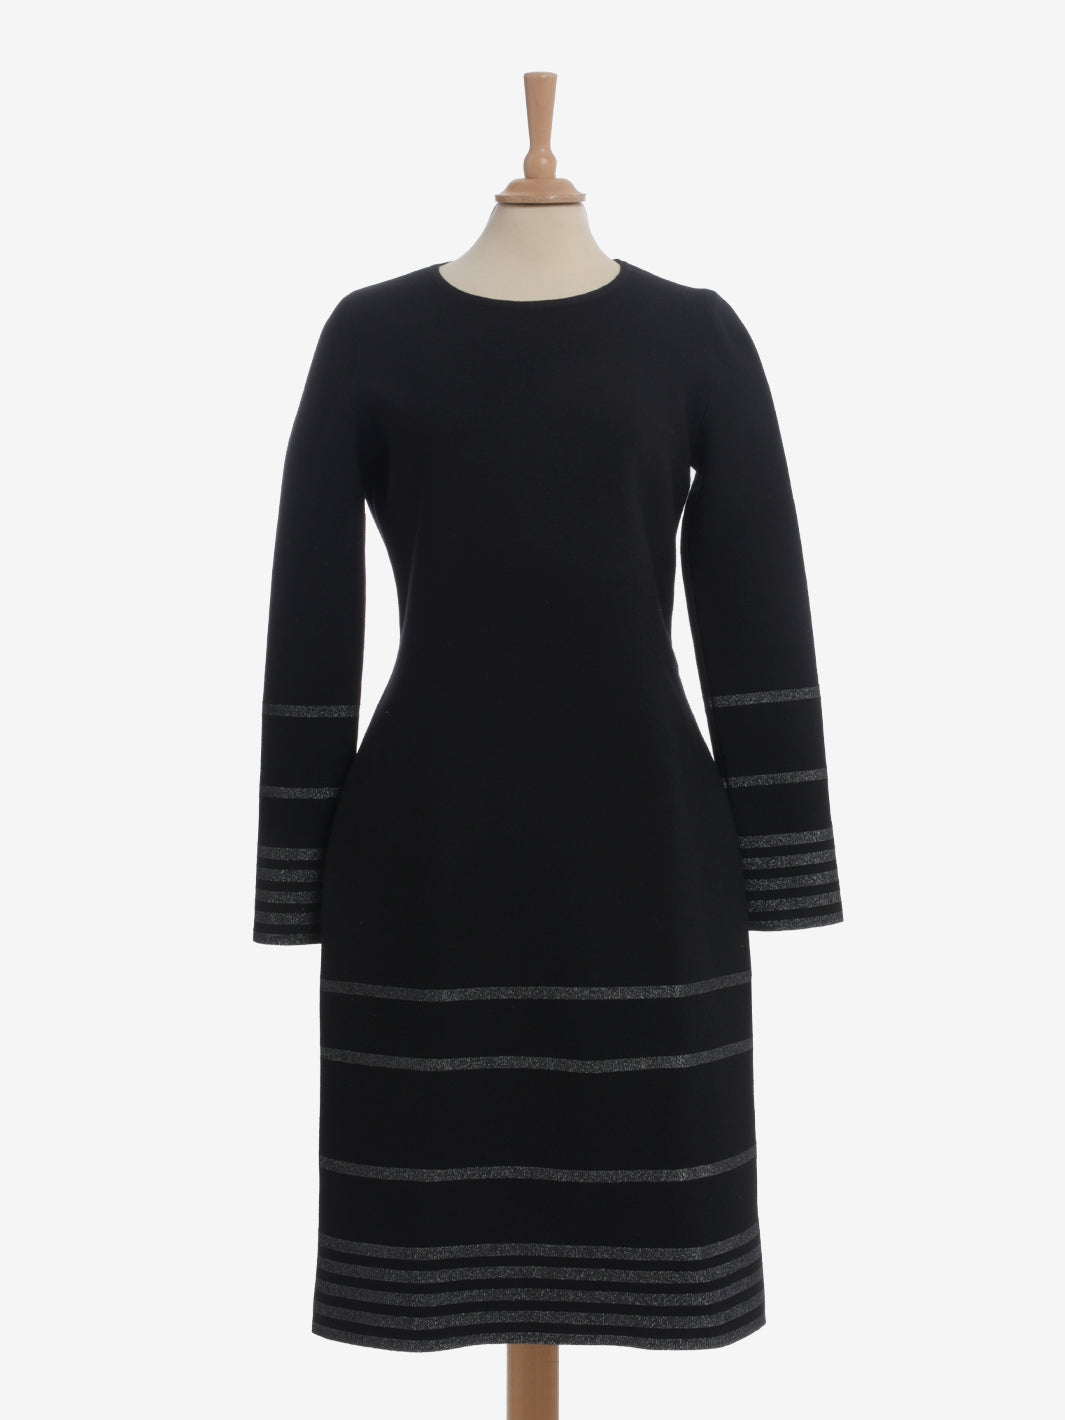 Yves Saint Laurent Structured Wool Dress - FW12